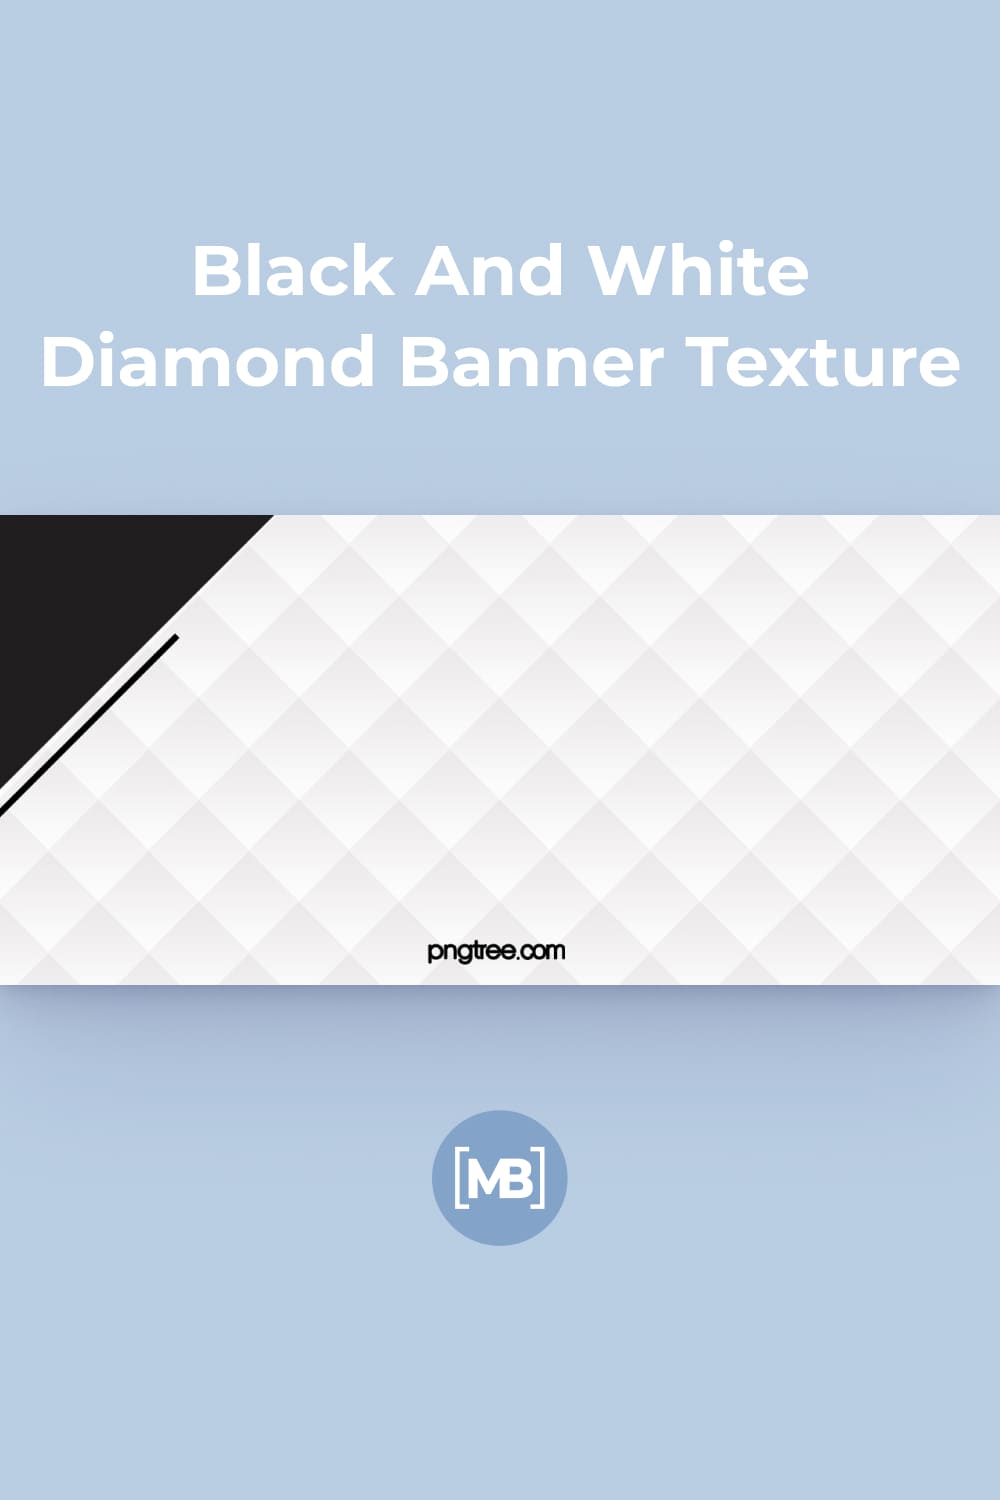 Black and white diamond banner texture.